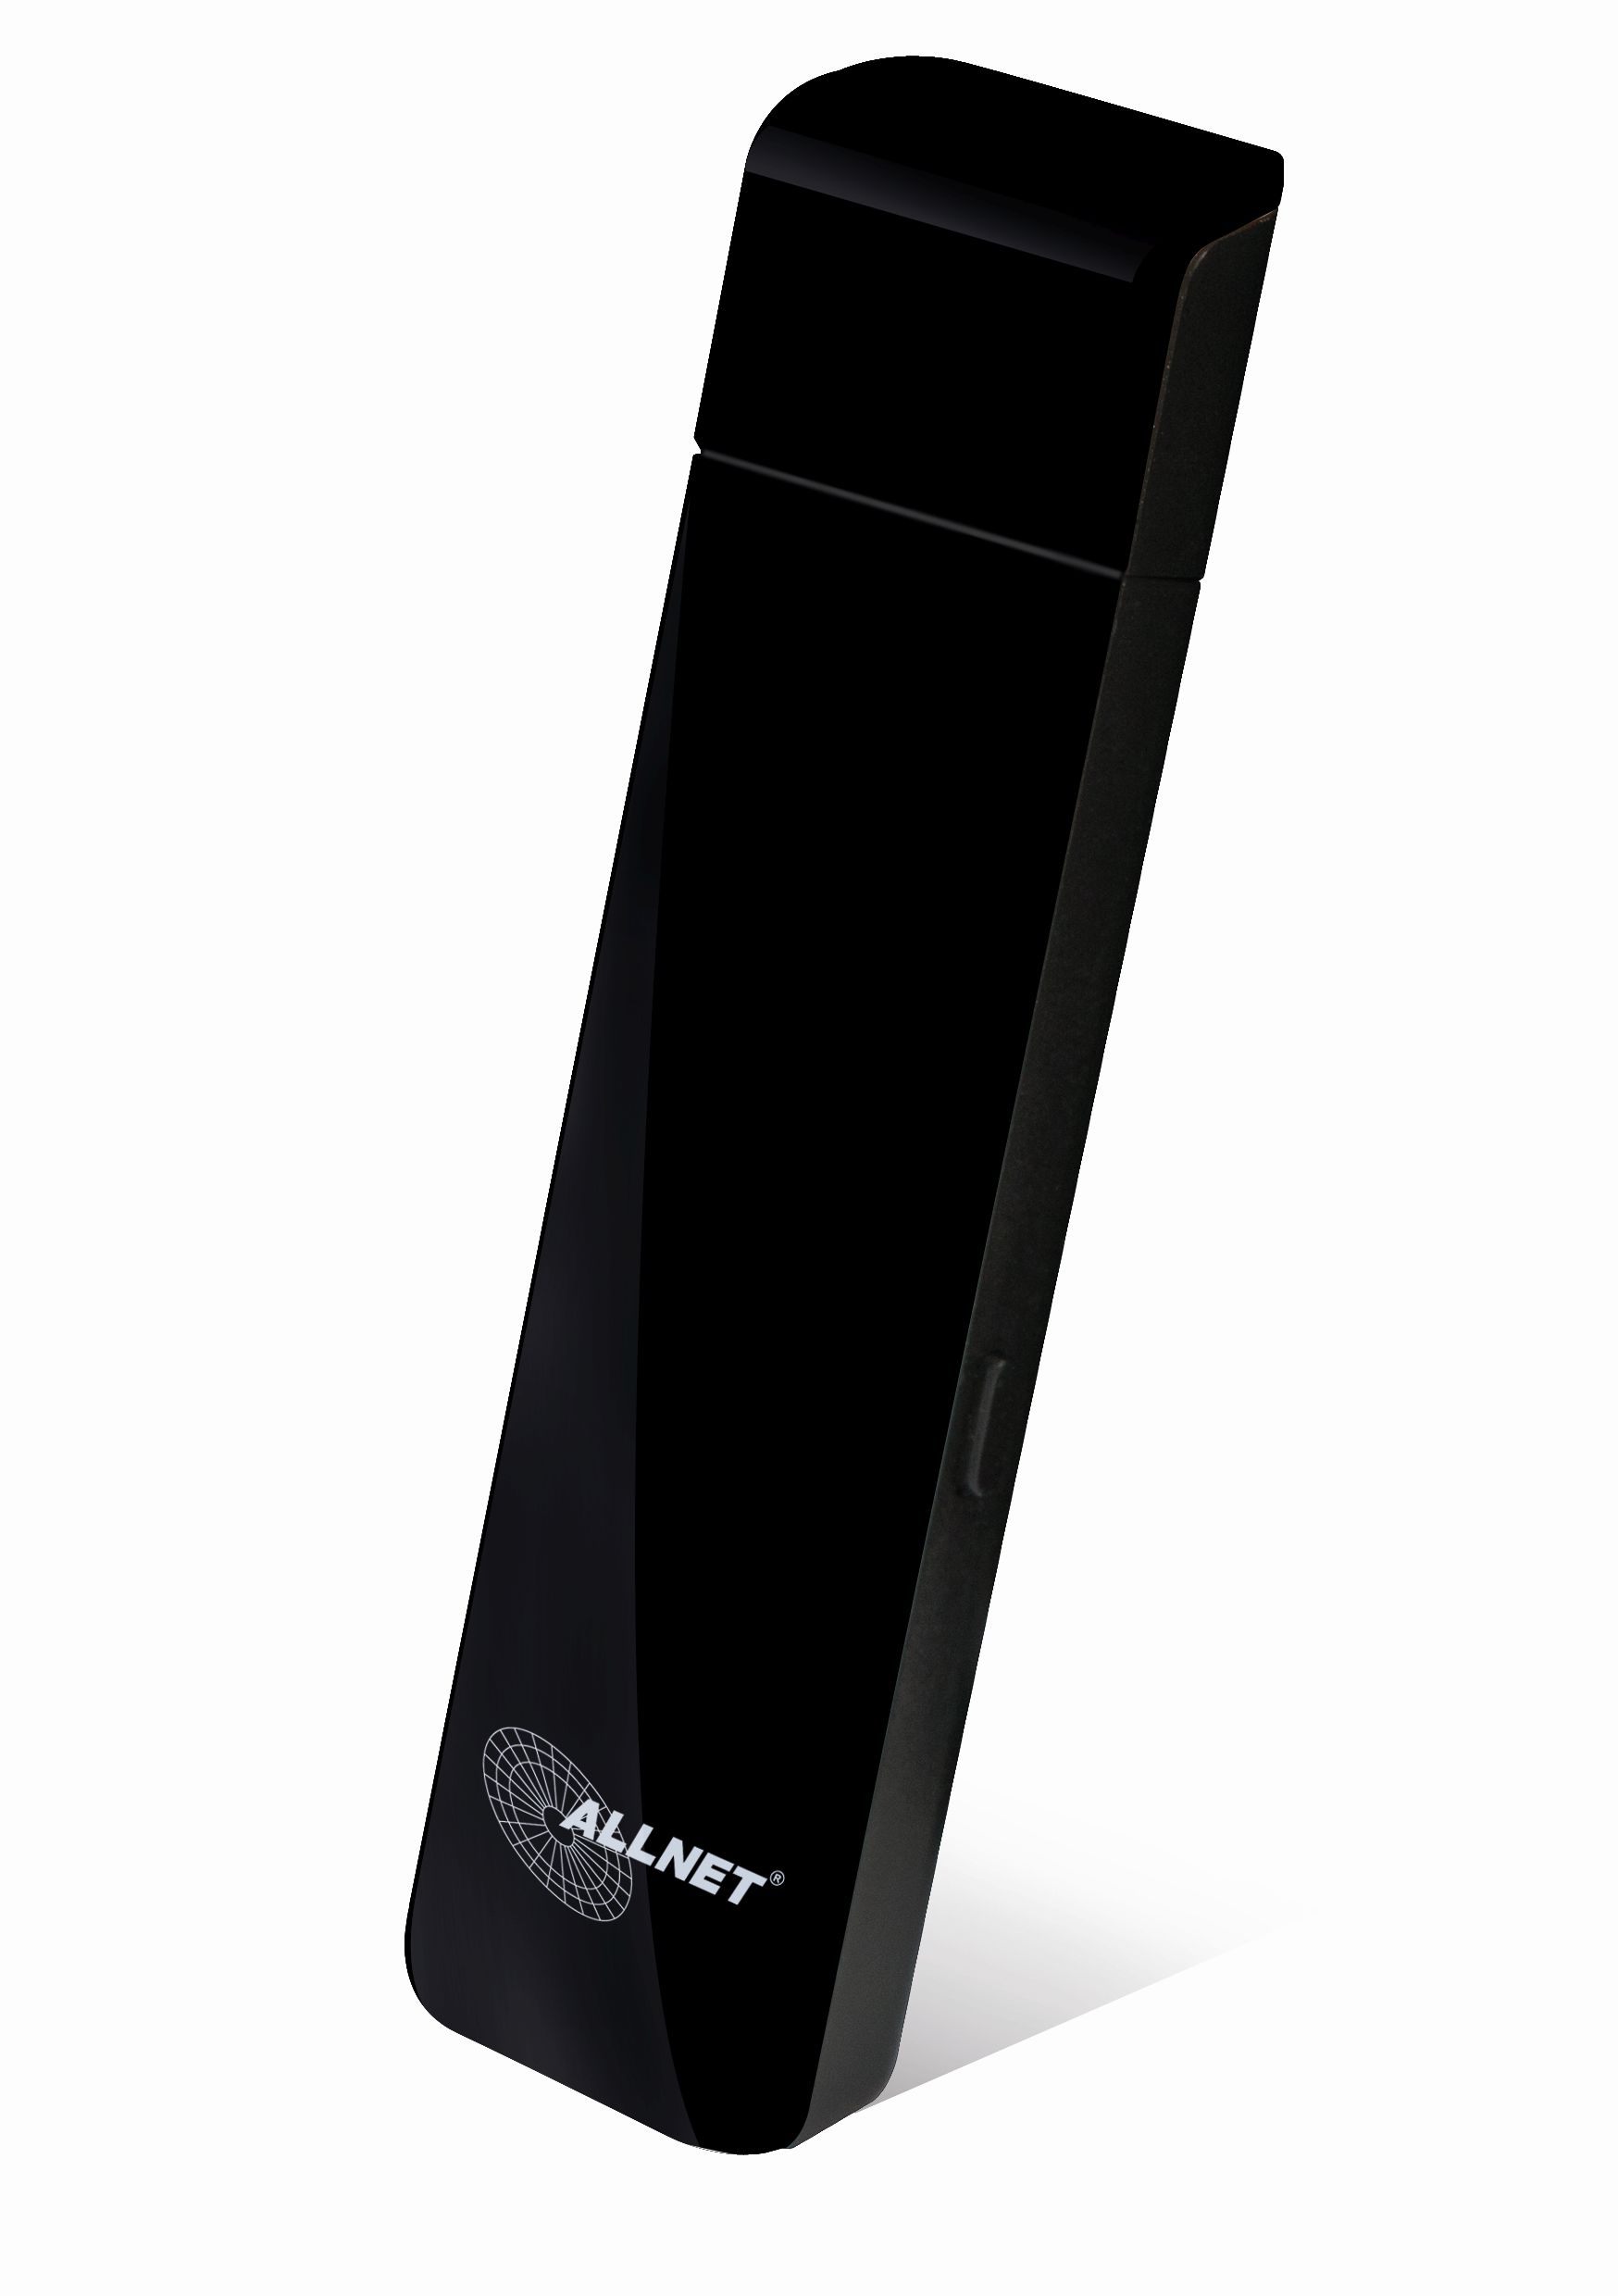 ALLNET Wireless AC 1200Mbit USB 3.0 WLAN Stick Dongle ALL-WA1200AC 5er Set &plus; Speaker